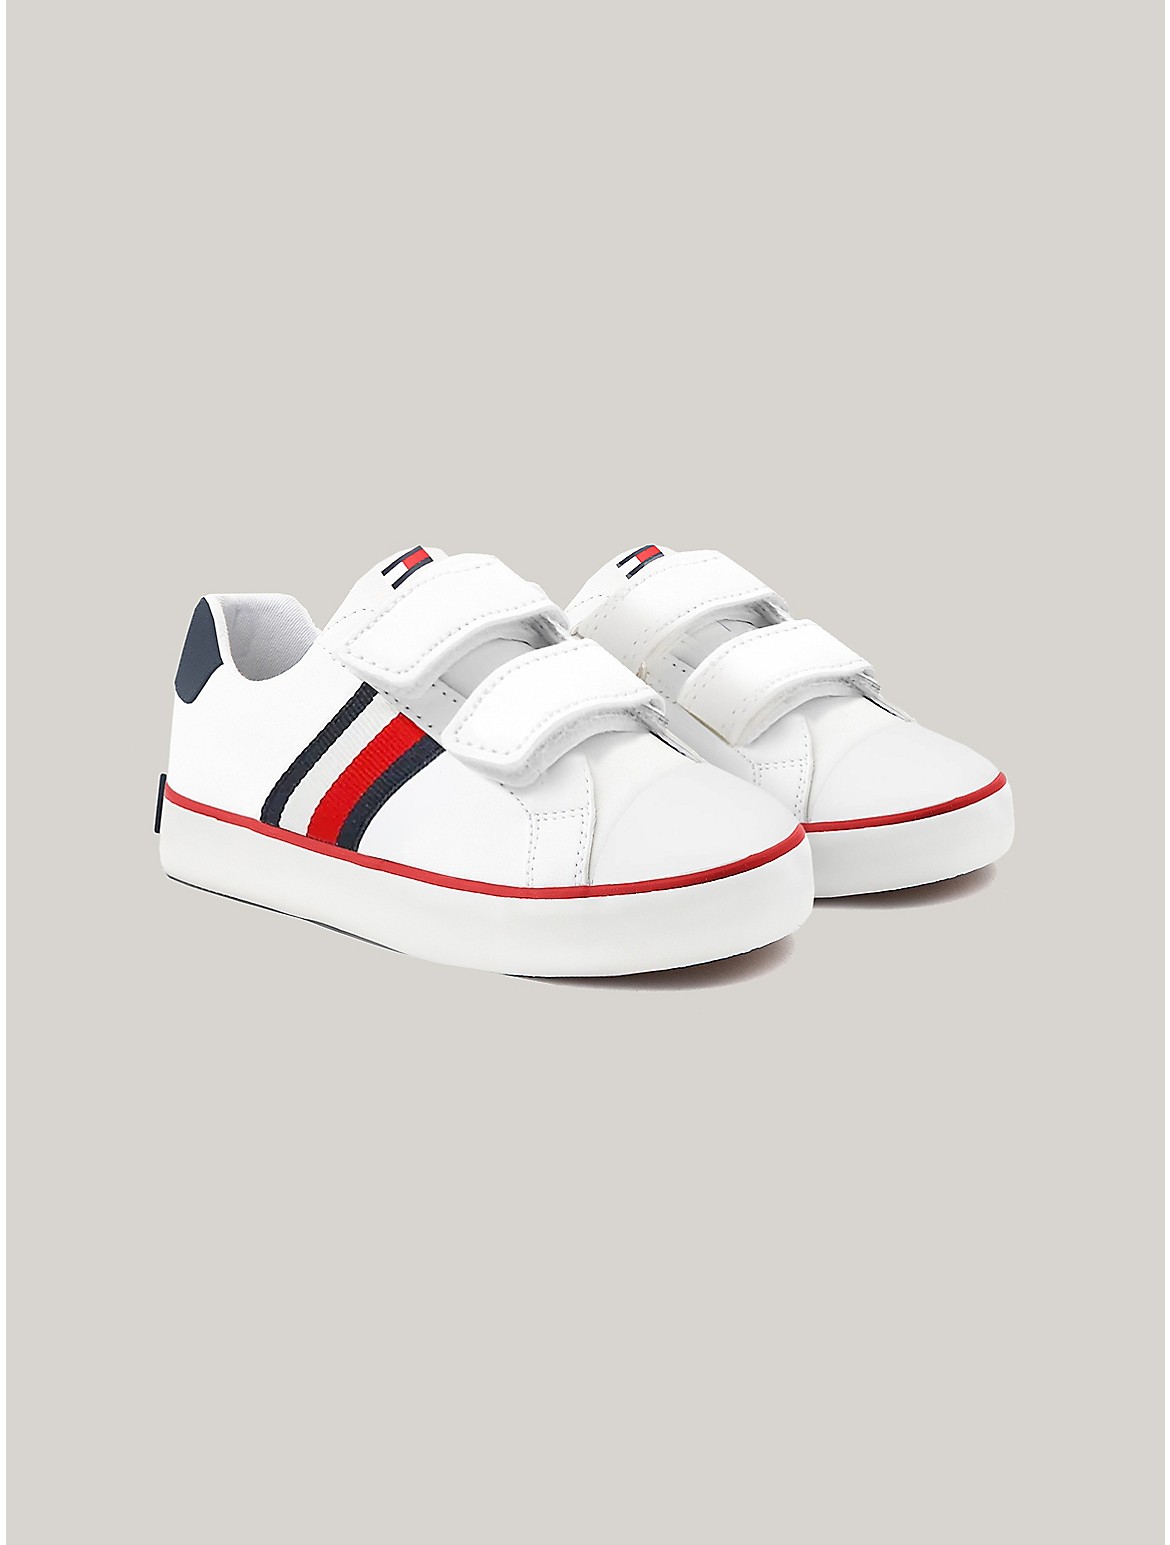 Tommy Hilfiger Kids' White Sneaker - White - 10T